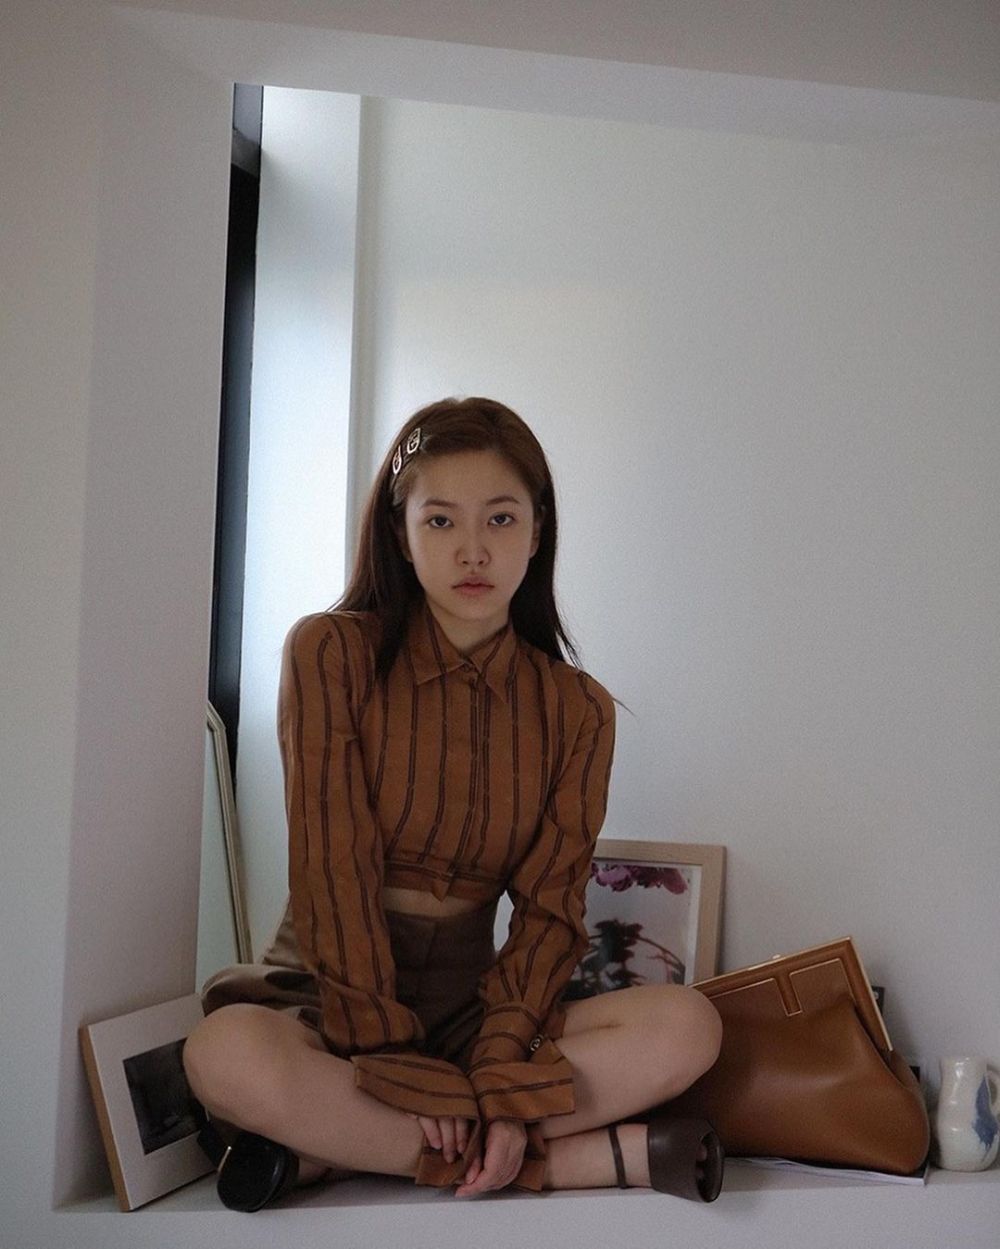 Ye-rim Kim Sexy and Hottest Photos , Latest Pics